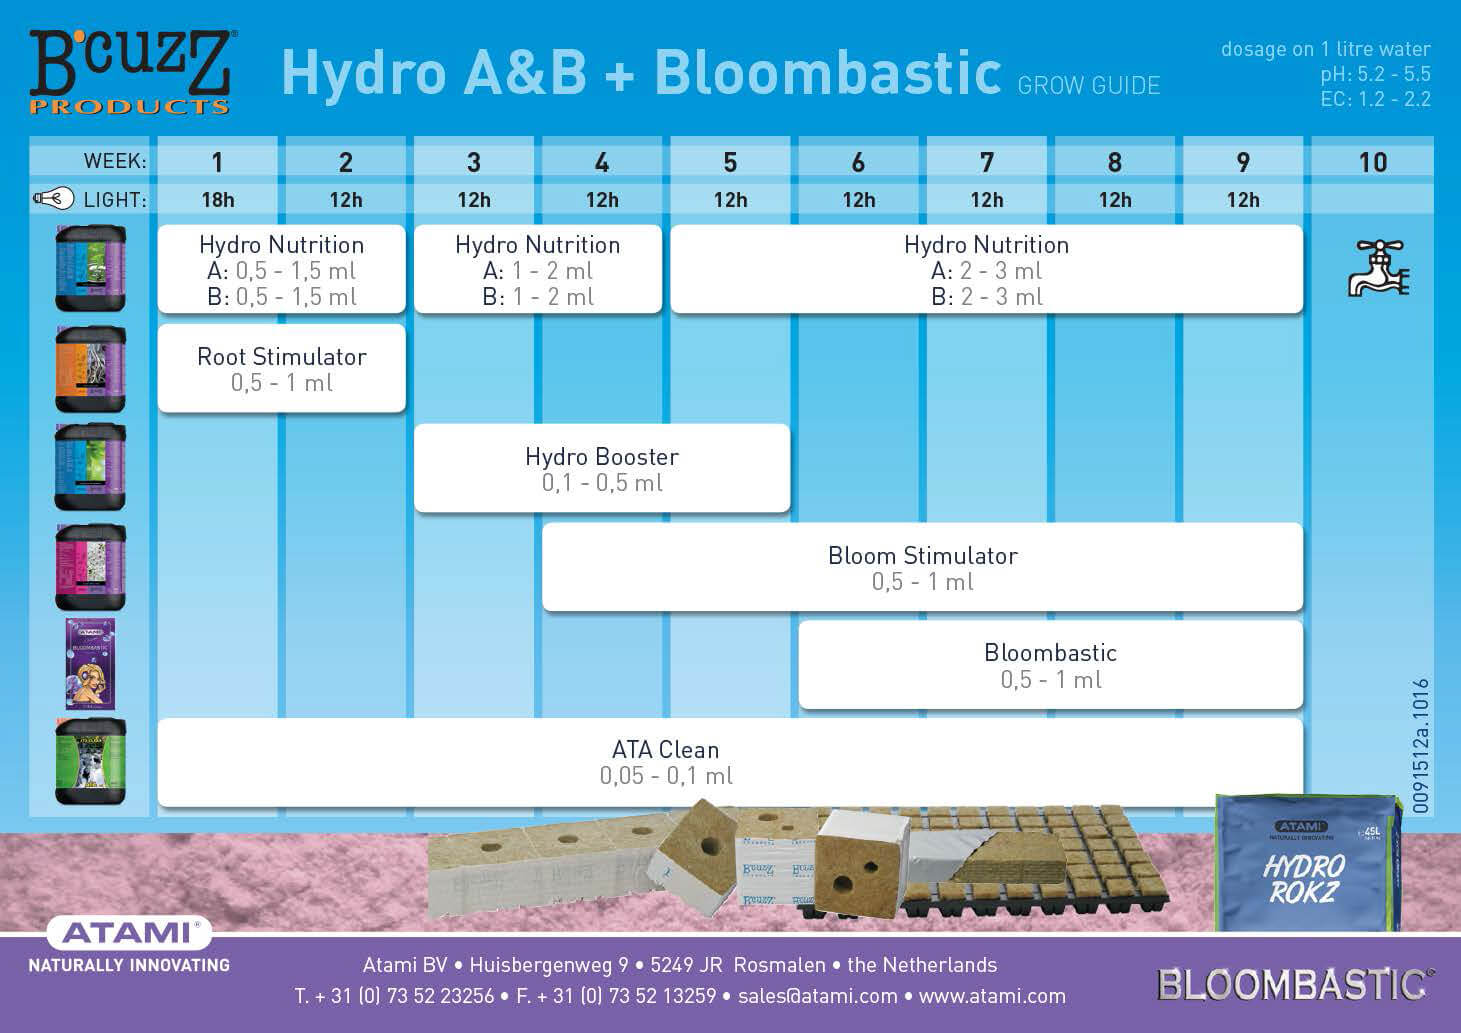 bcuzz-hydro-a-b-bloombastic